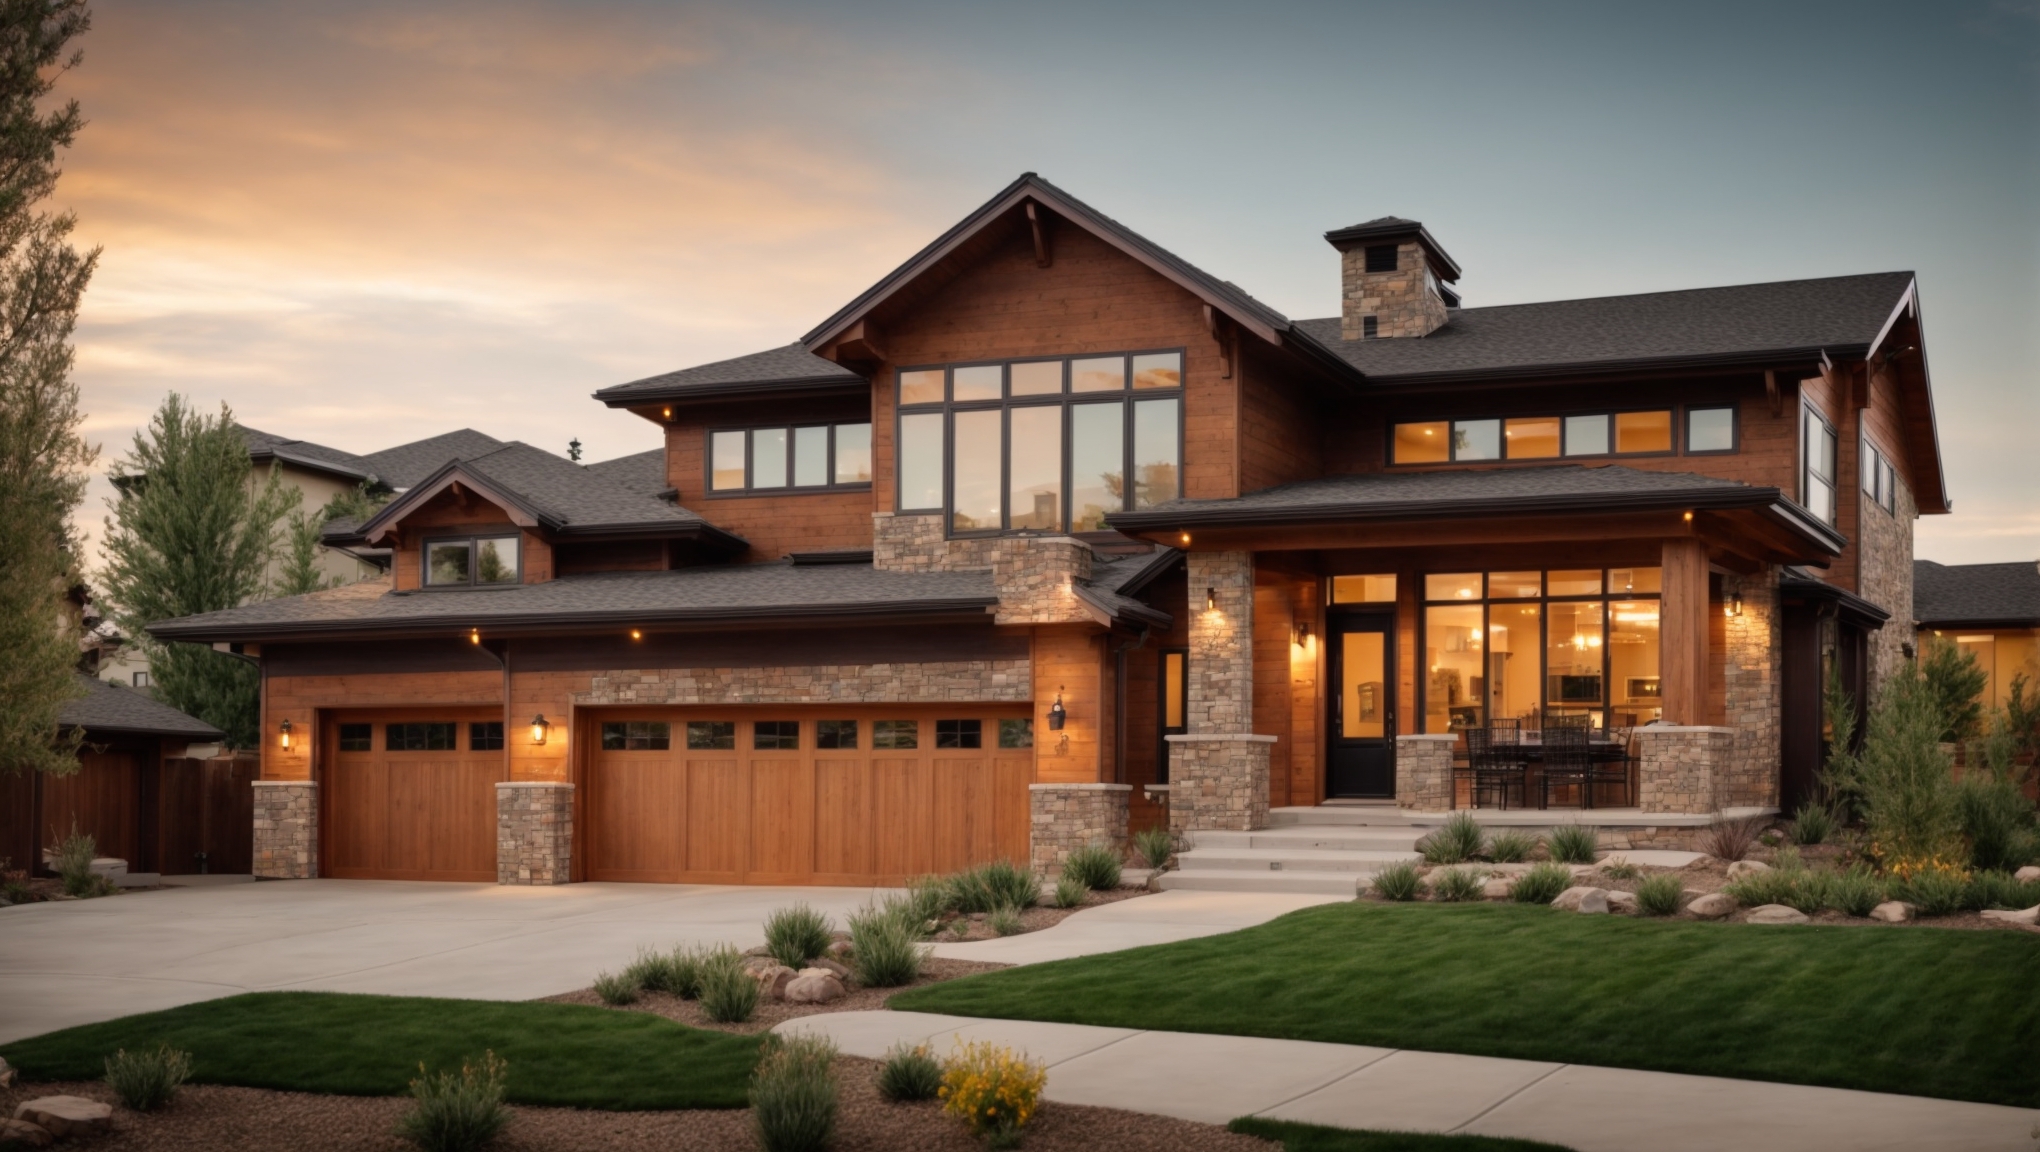 Modest Ranch Style Home with Stucco Siding - Siding Colorado in Colorado Springs